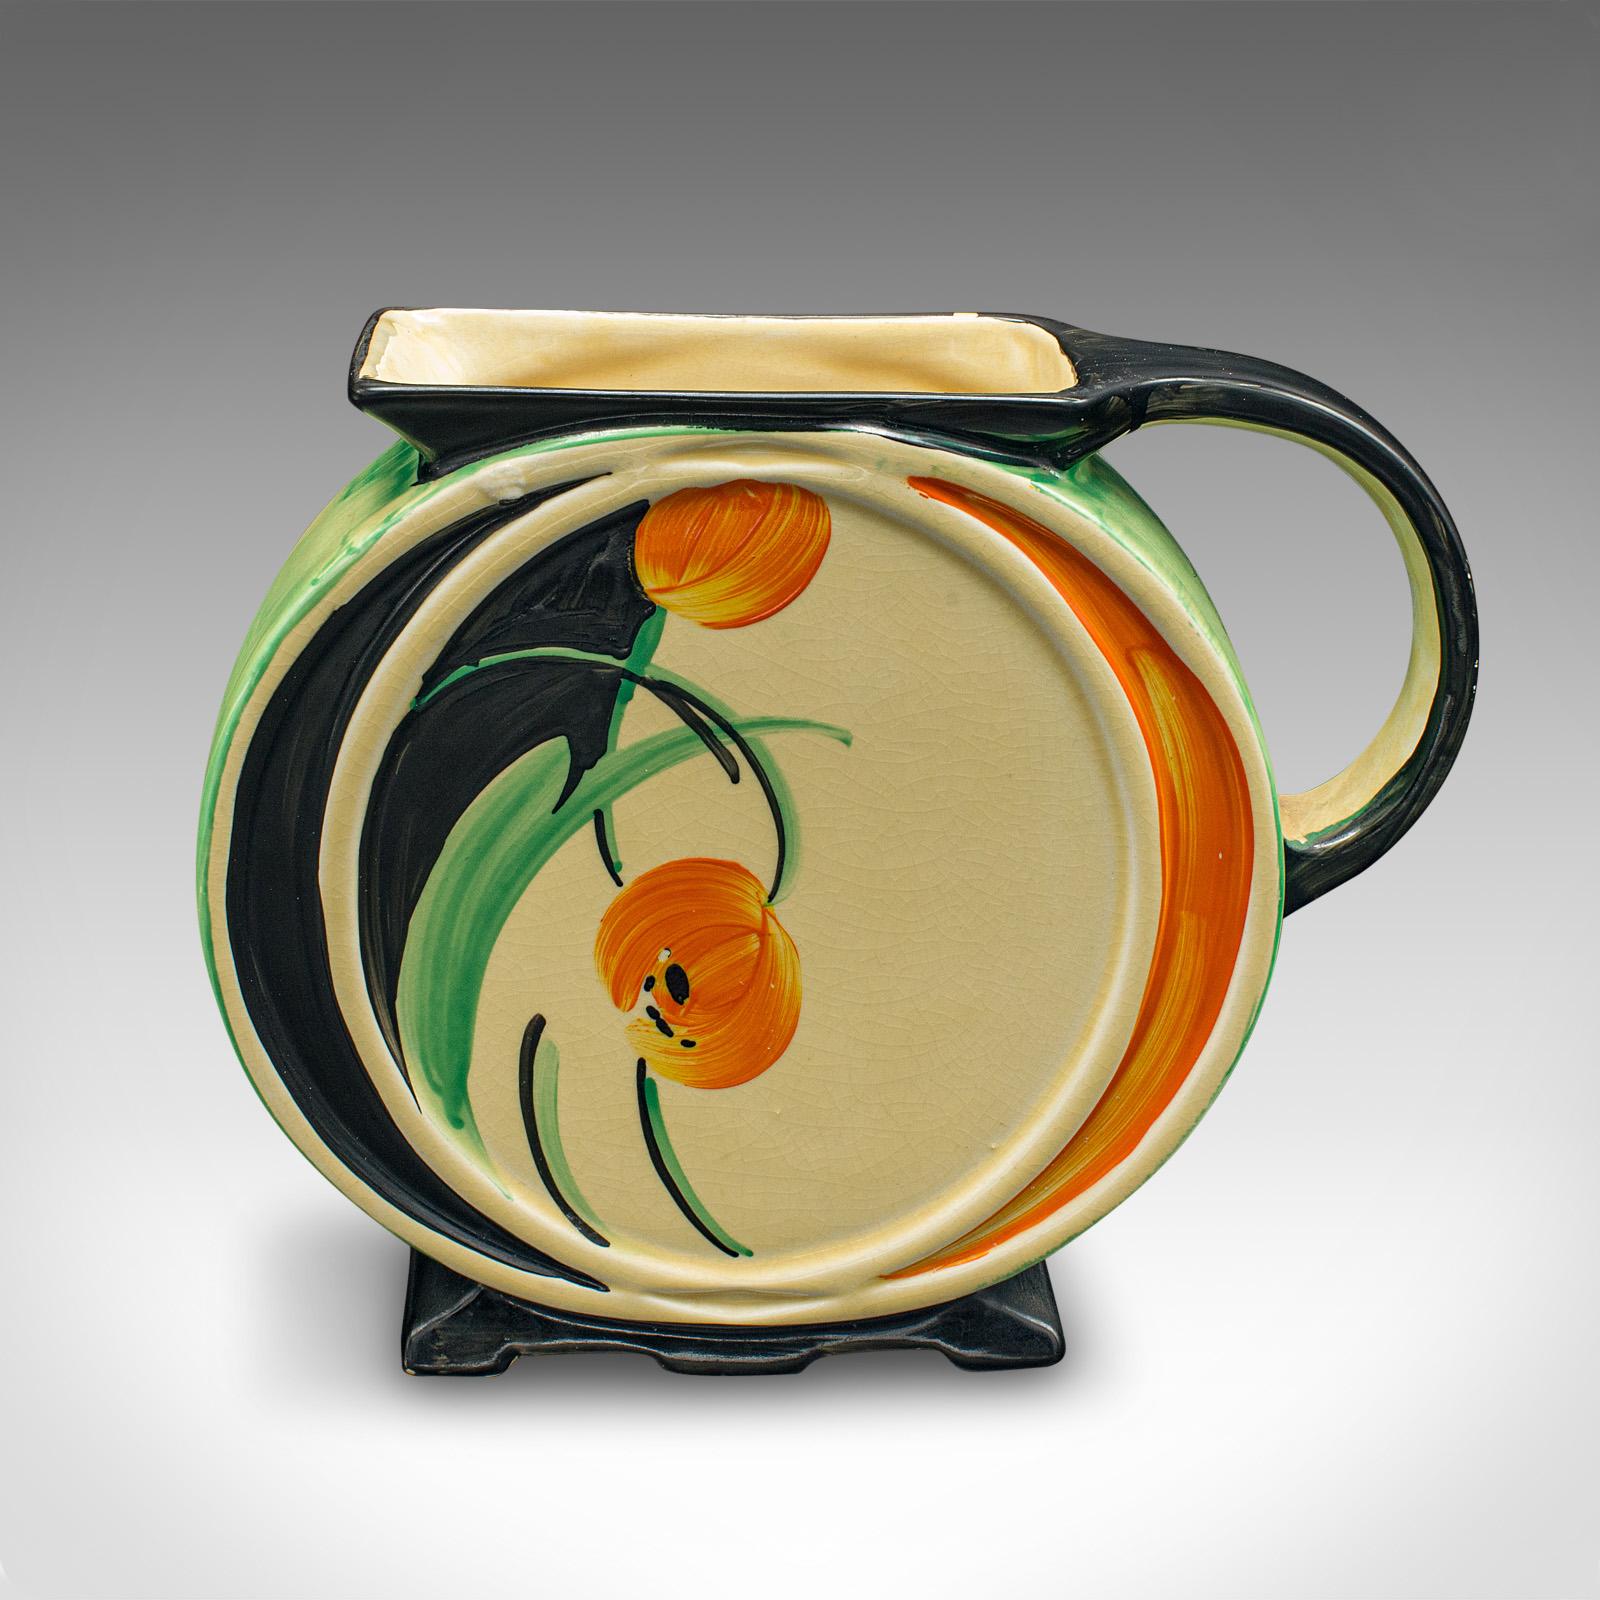 British Vintage Display Jug, English, Ceramic, Dried Flower Vase, Art Deco, Circa 1930